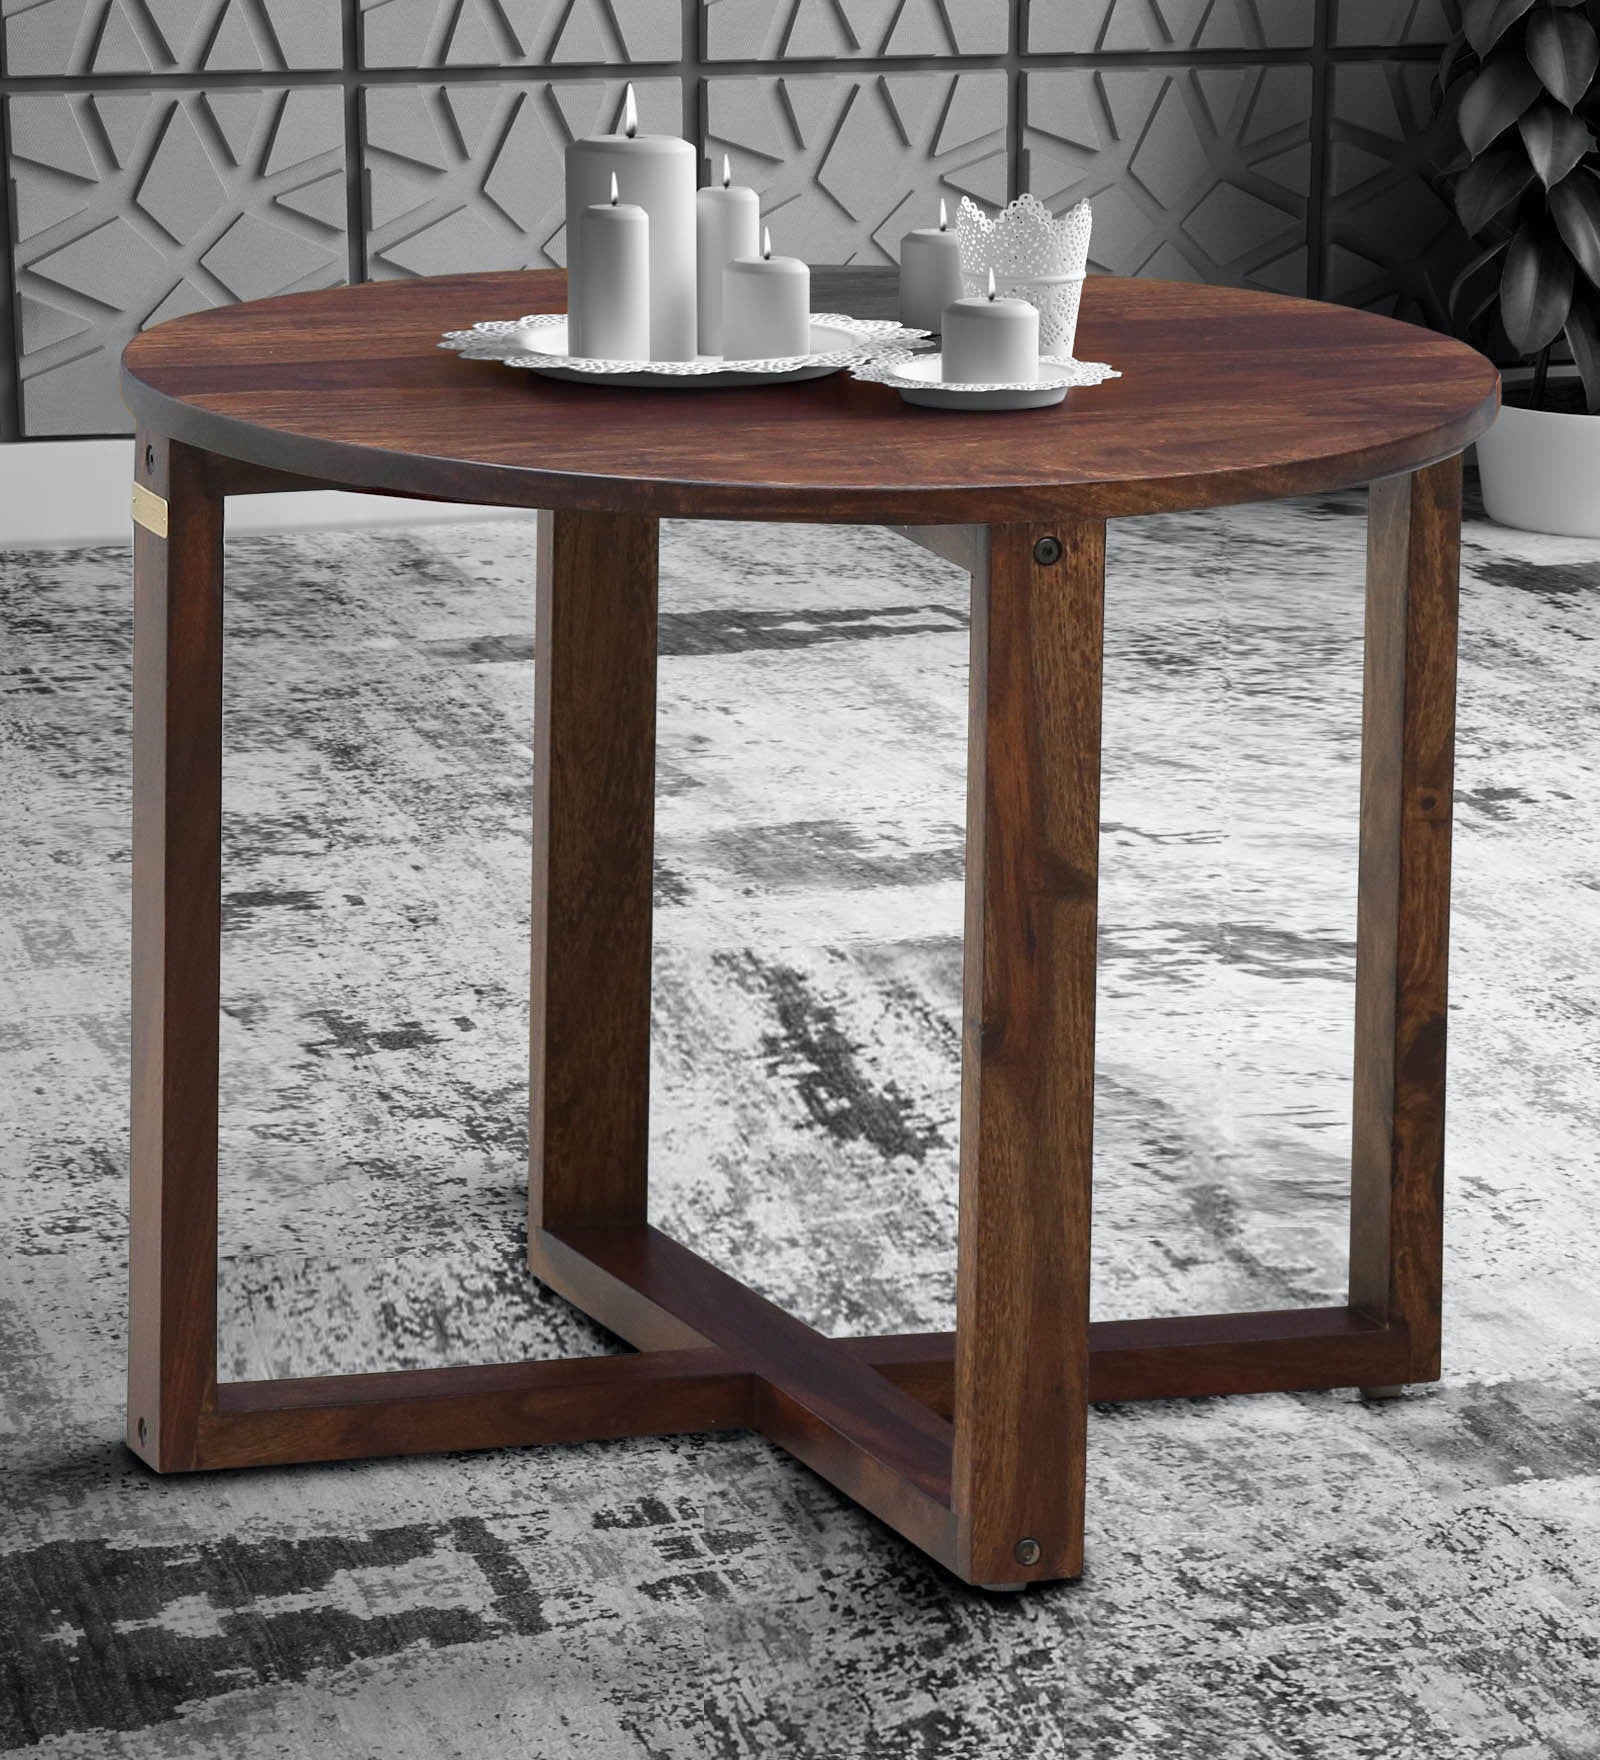 Detro Wooden Center Coffee Table For Living Room in Provincial Teak Finish - Rajwada Furnish